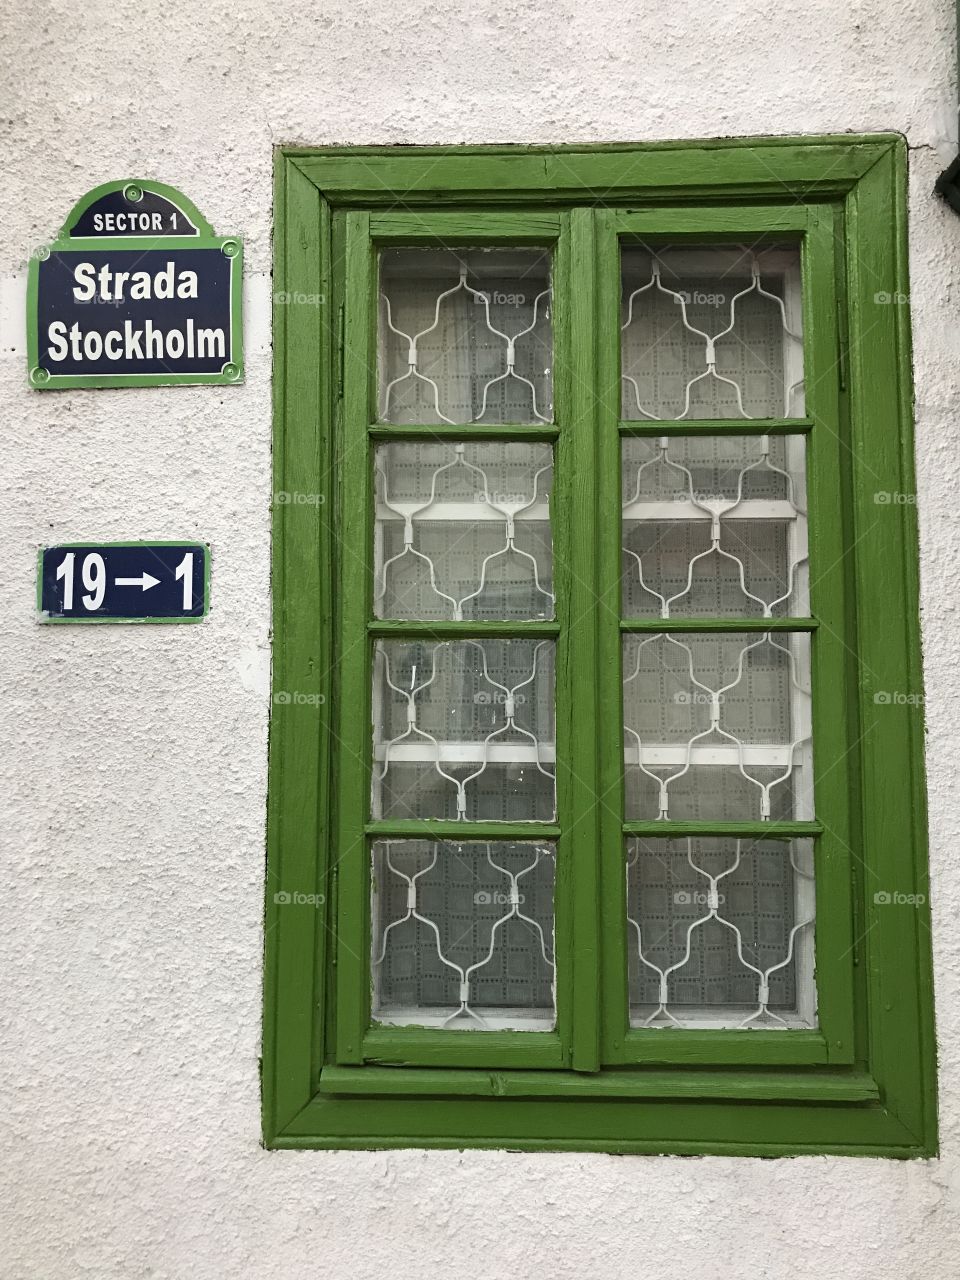 Stockholm street with green window, Bucharest, Romania